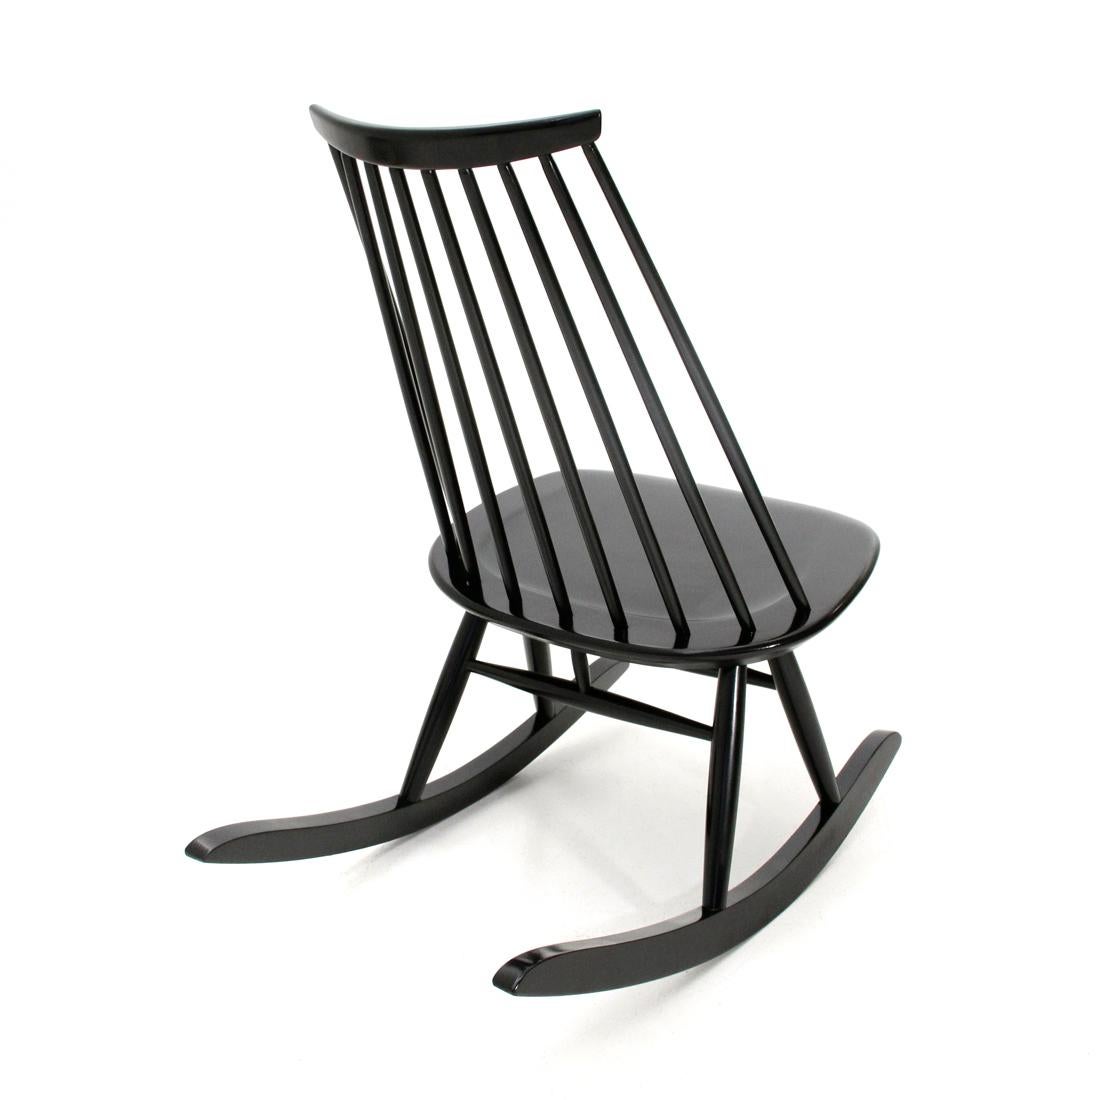 Mid-20th Century Mid-Century Modern Black Mademoiselle Rocking Chair by Ilmari Tapiovaara for Art